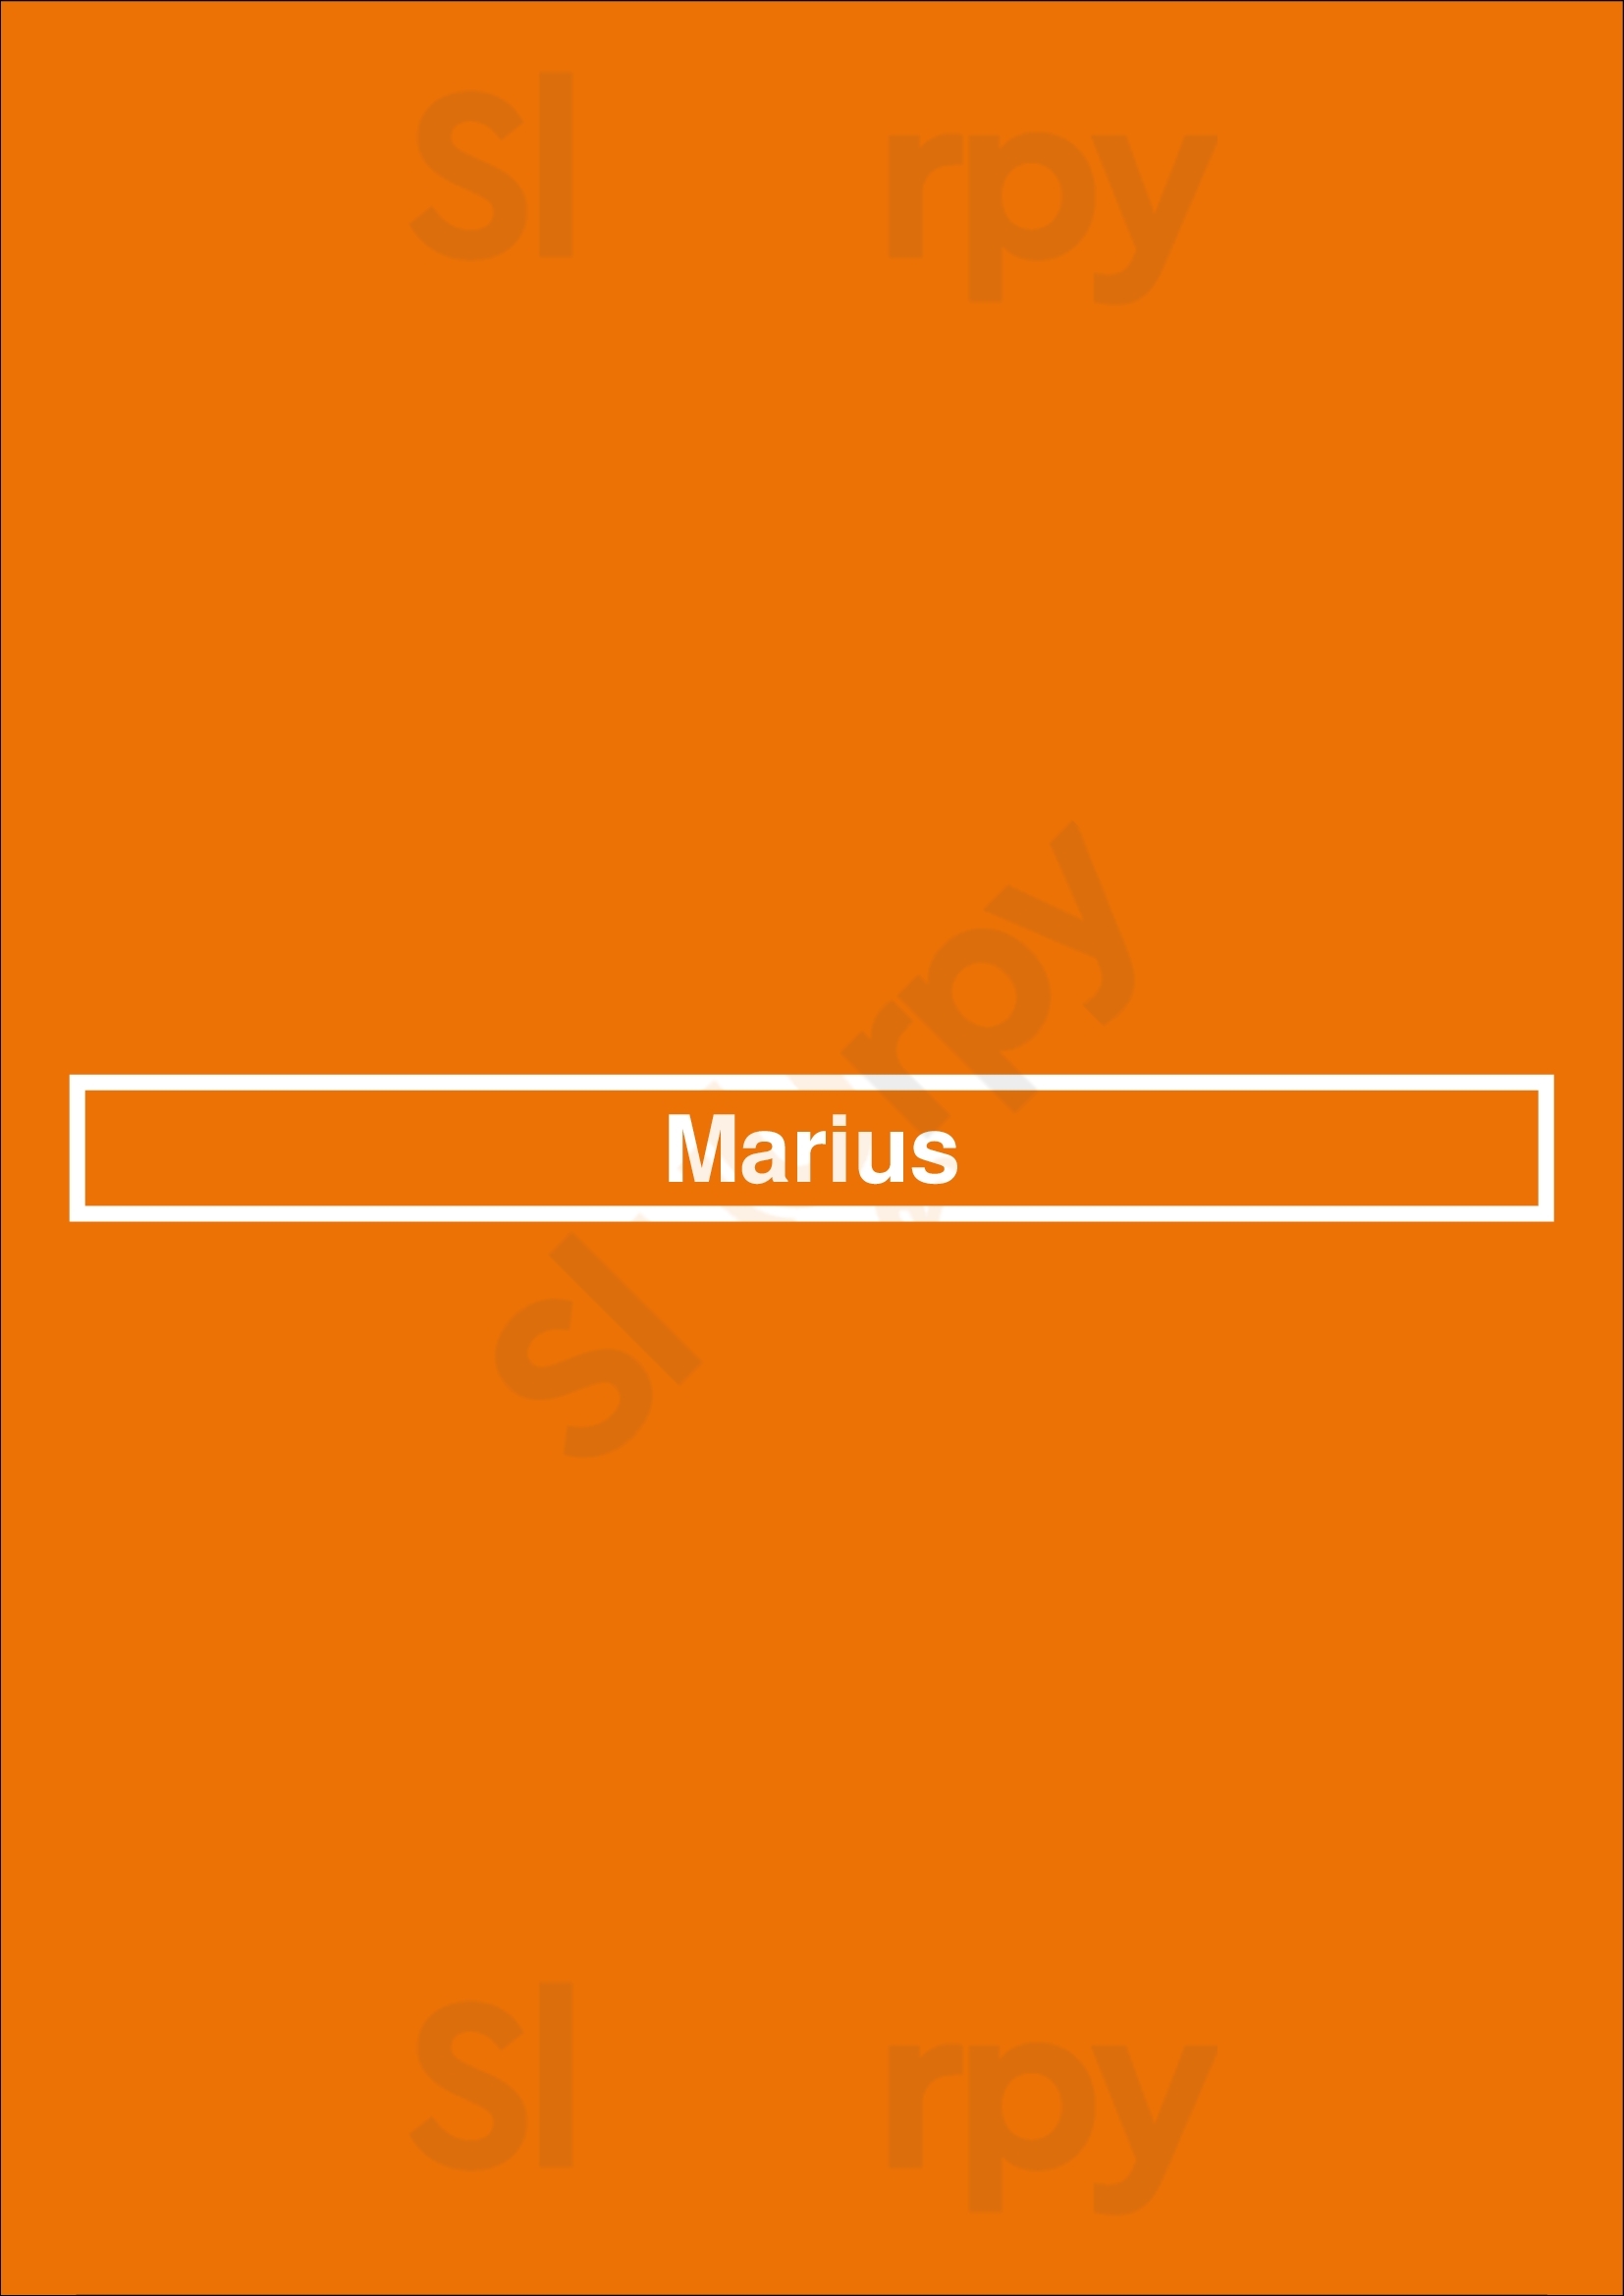 Marius Amsterdam Menu - 1